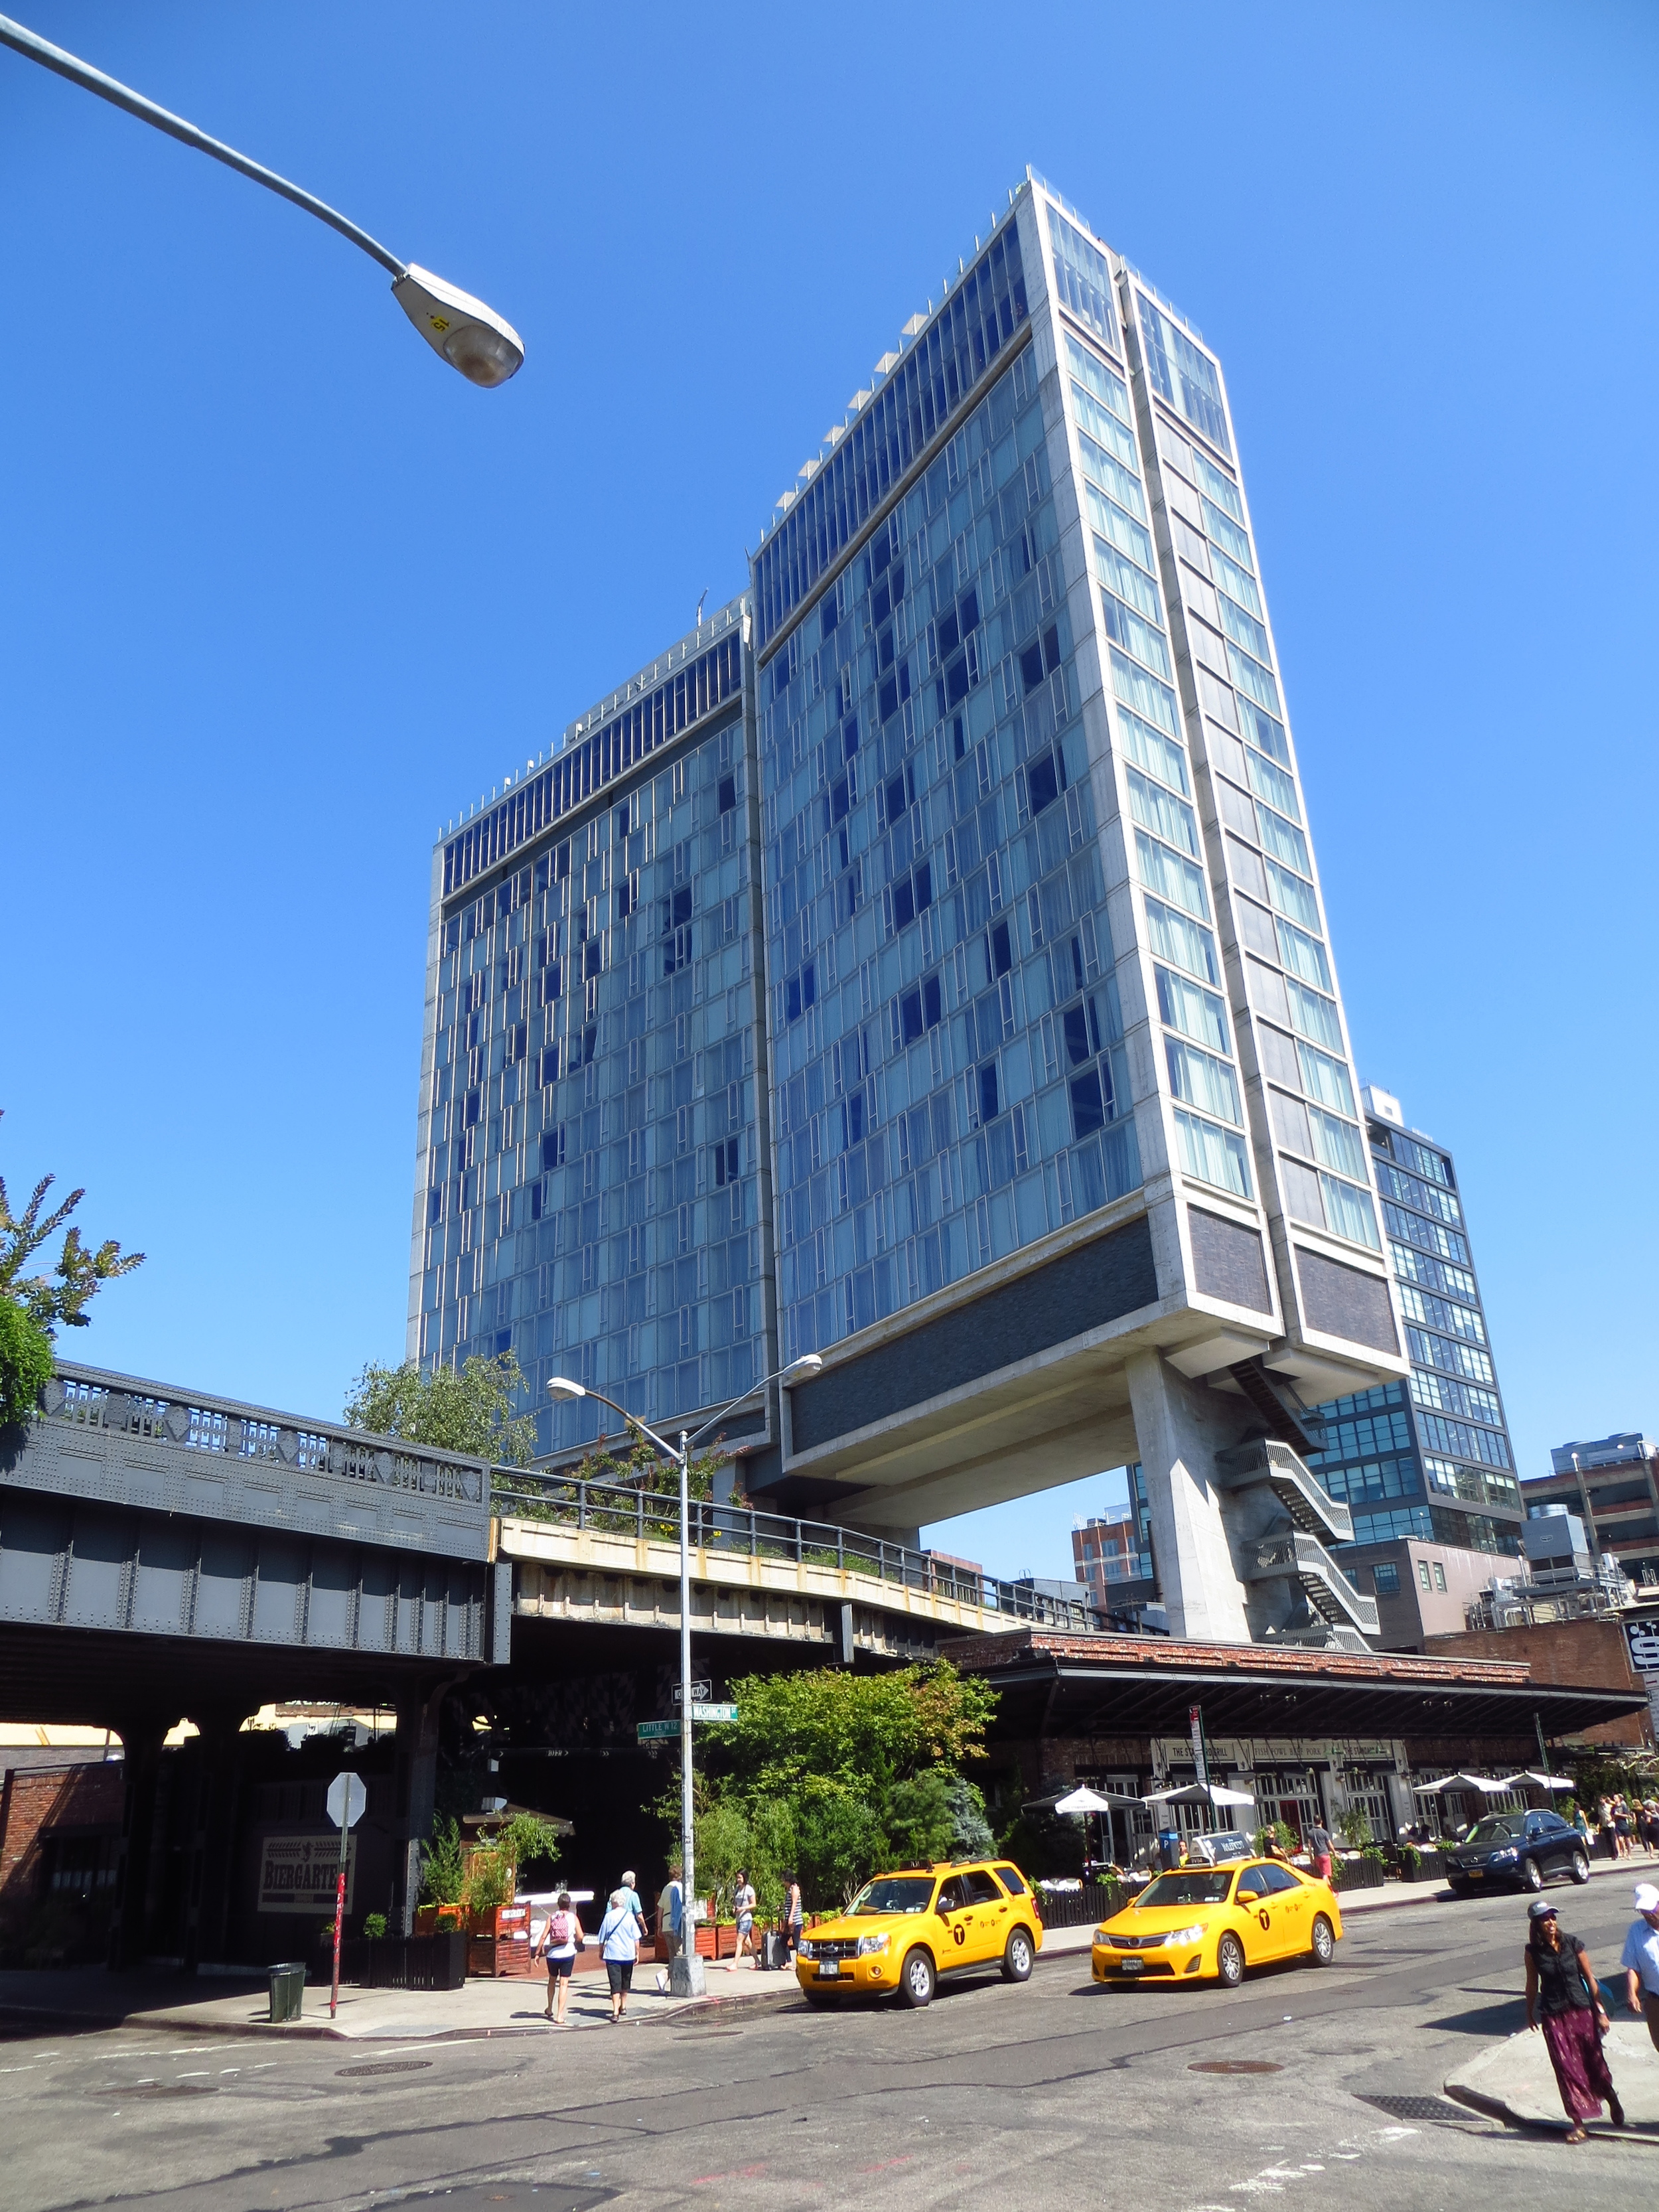 The Standard Hotel & Highline